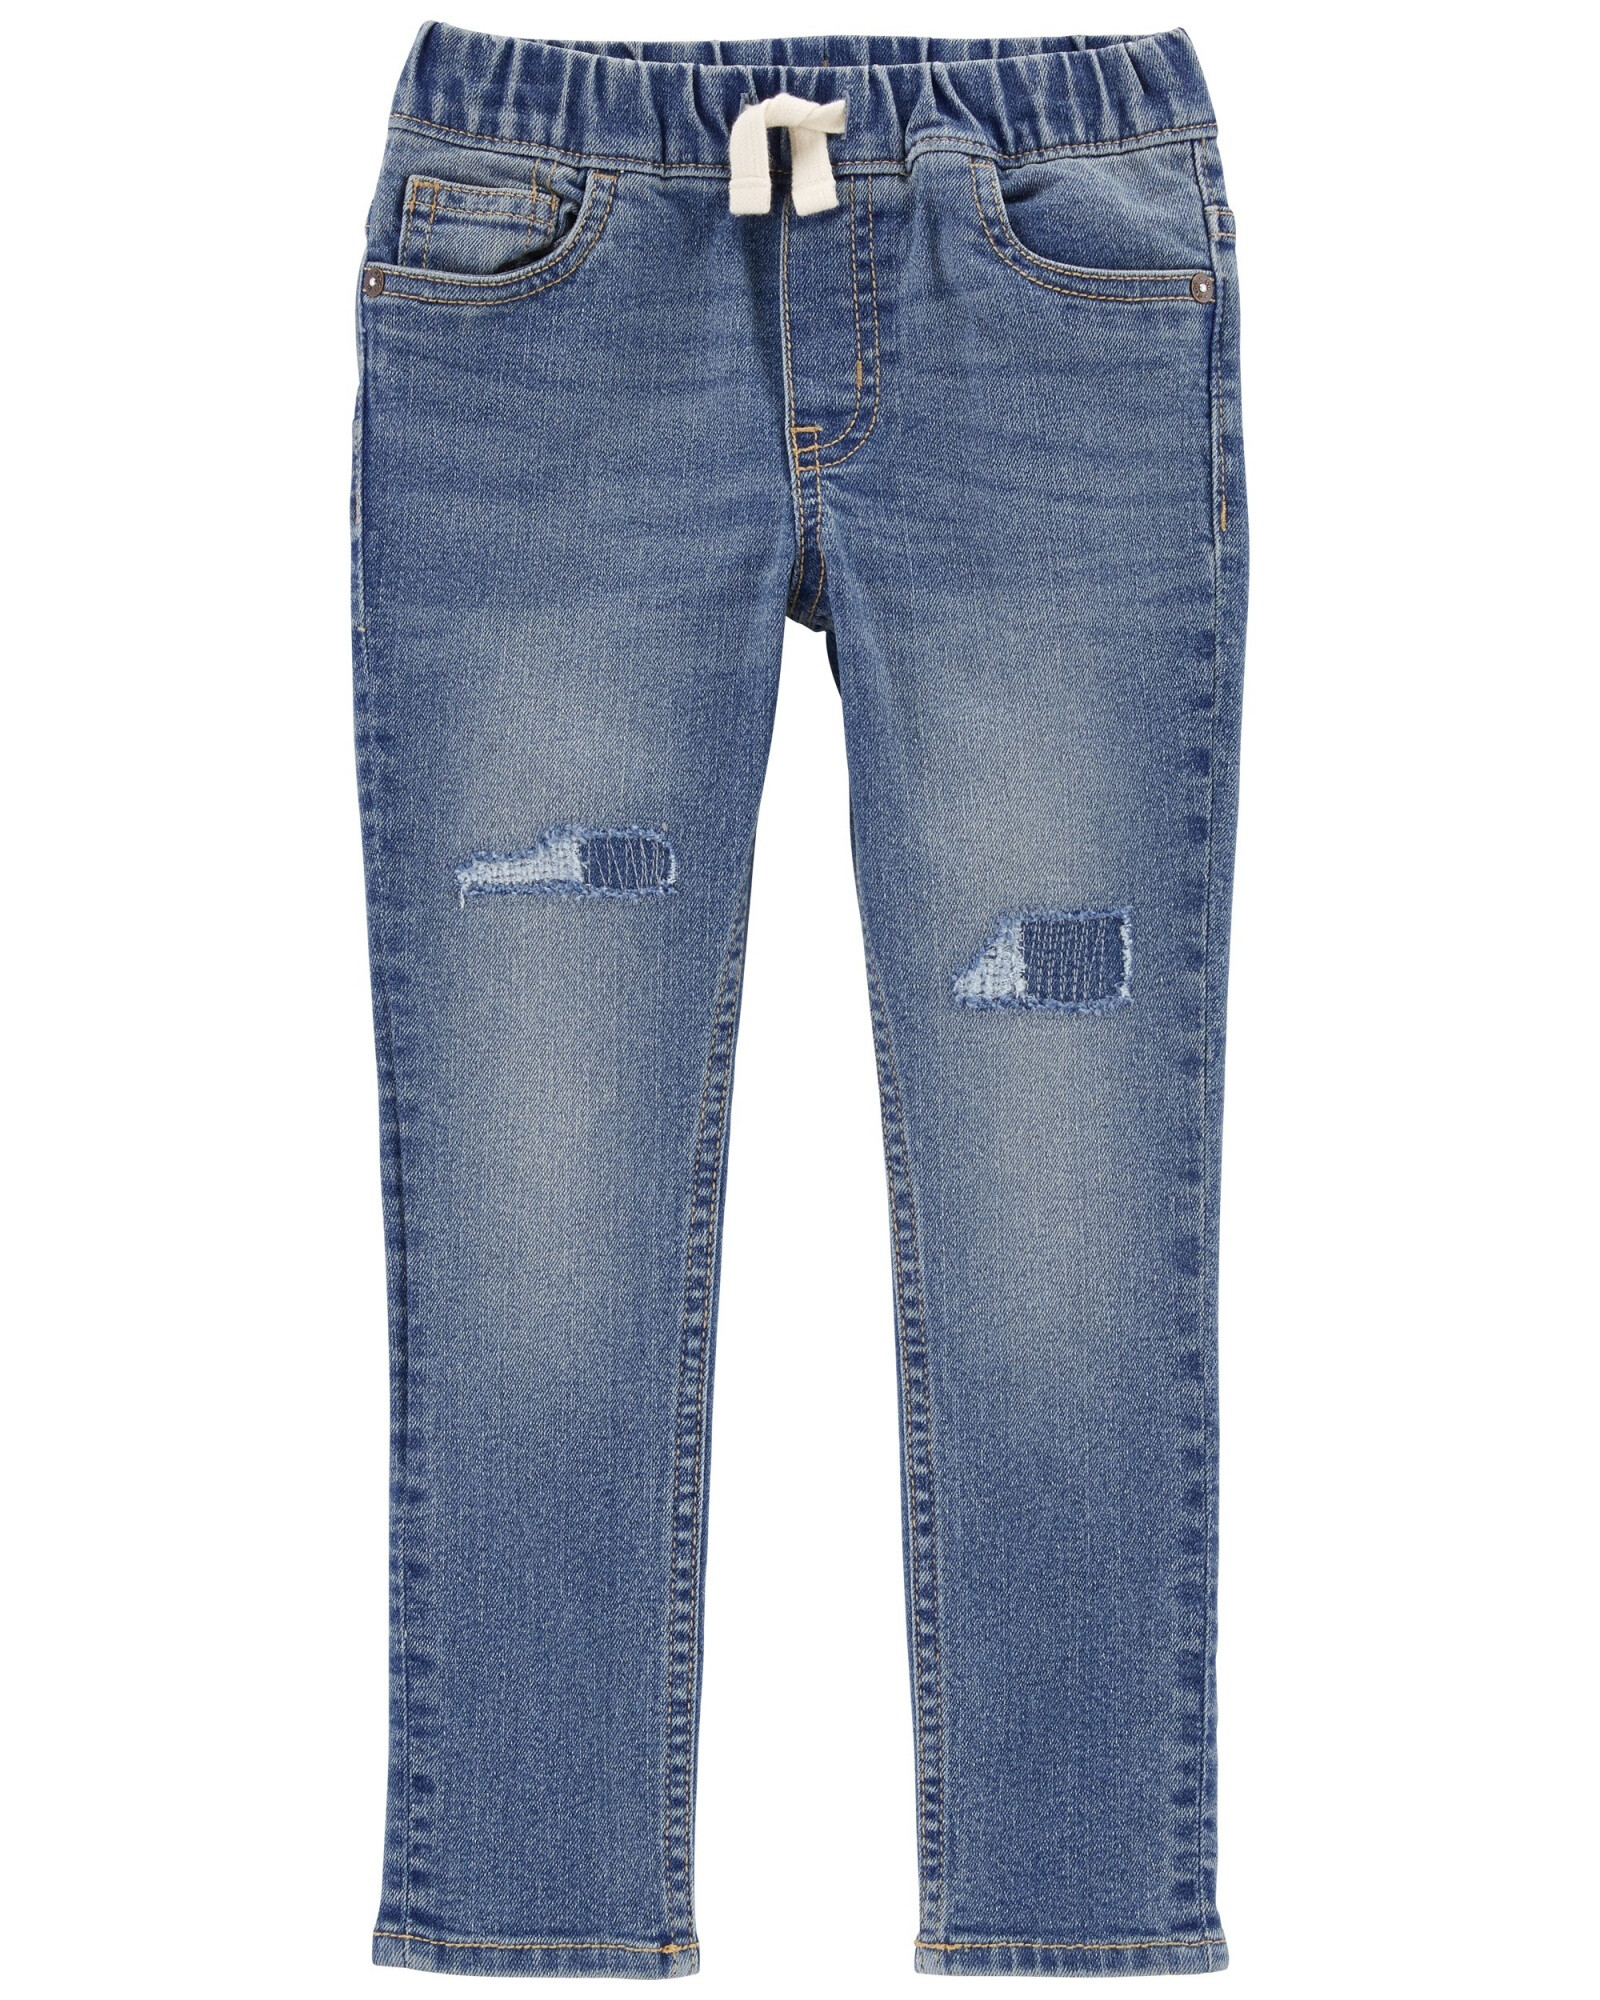 Pantalón jean ajustado, con rasgados. Talles 2-5T Sin color